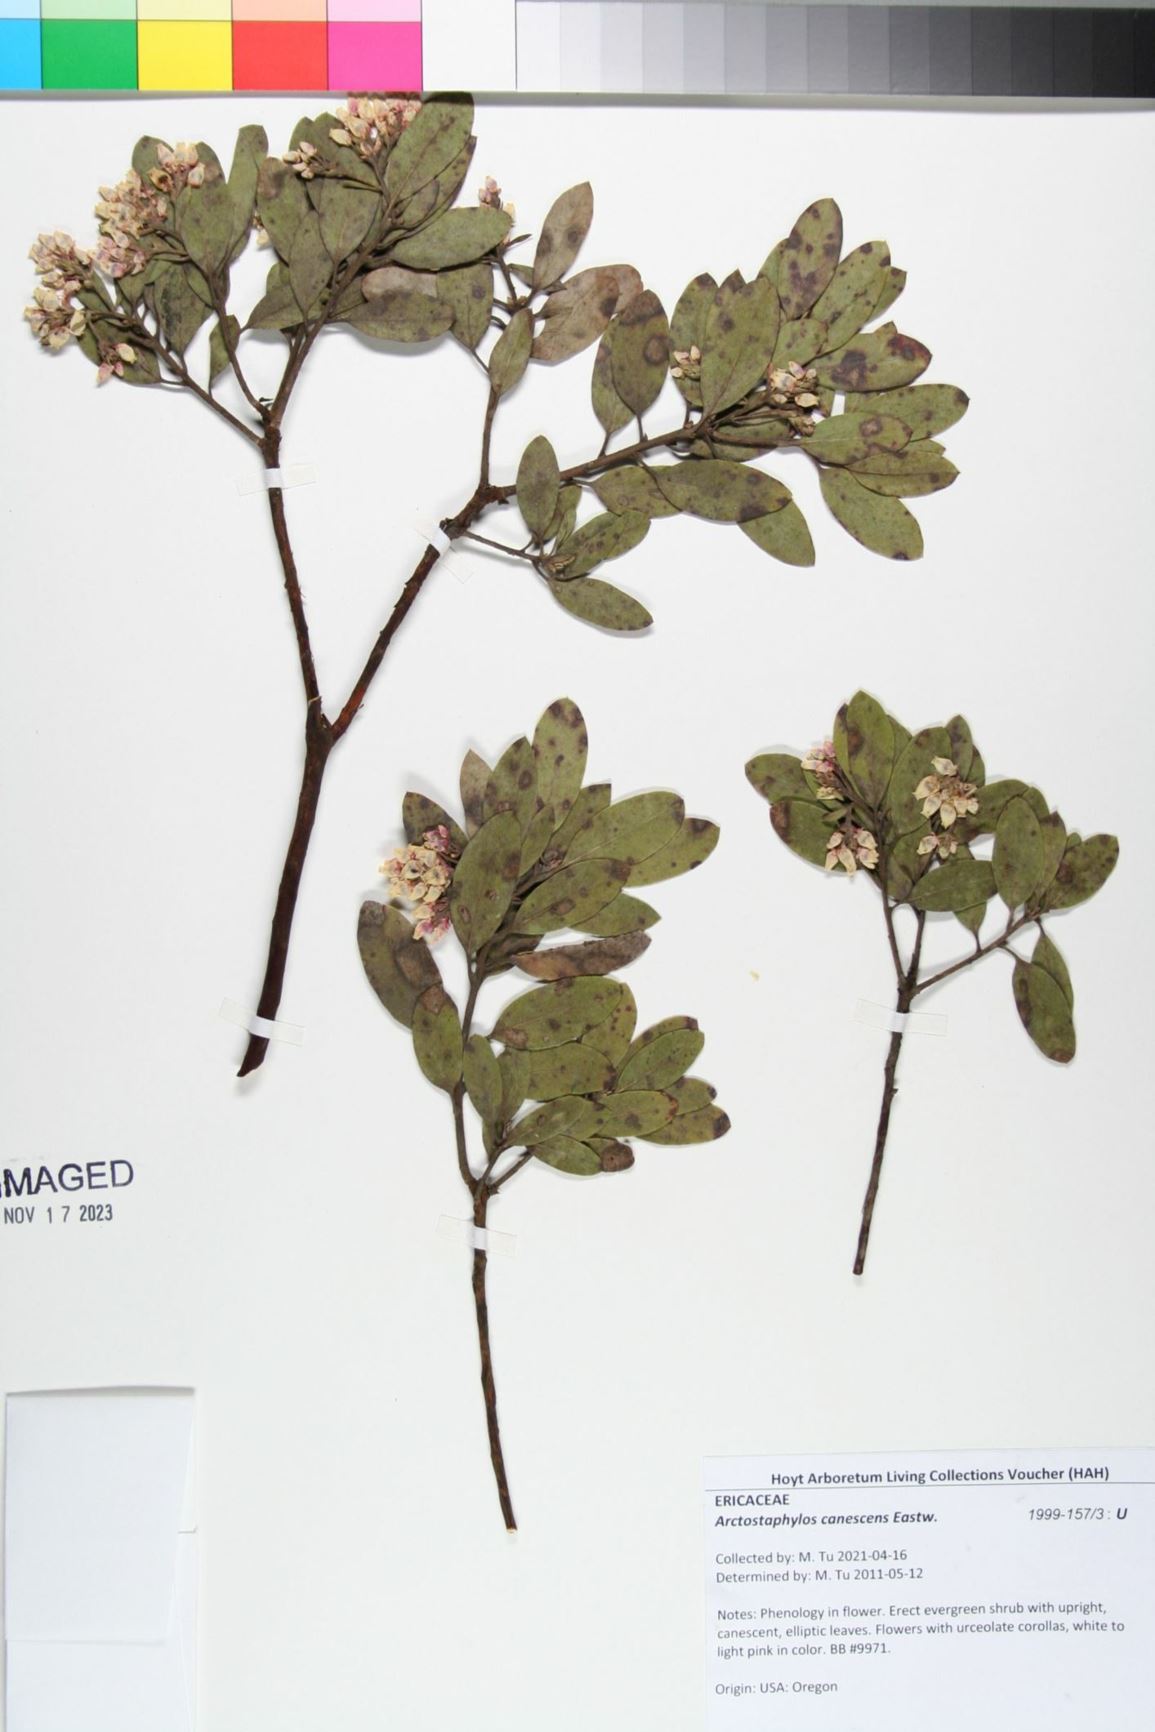 Arctostaphylos canescens - hoary manzanita, silver manzanita